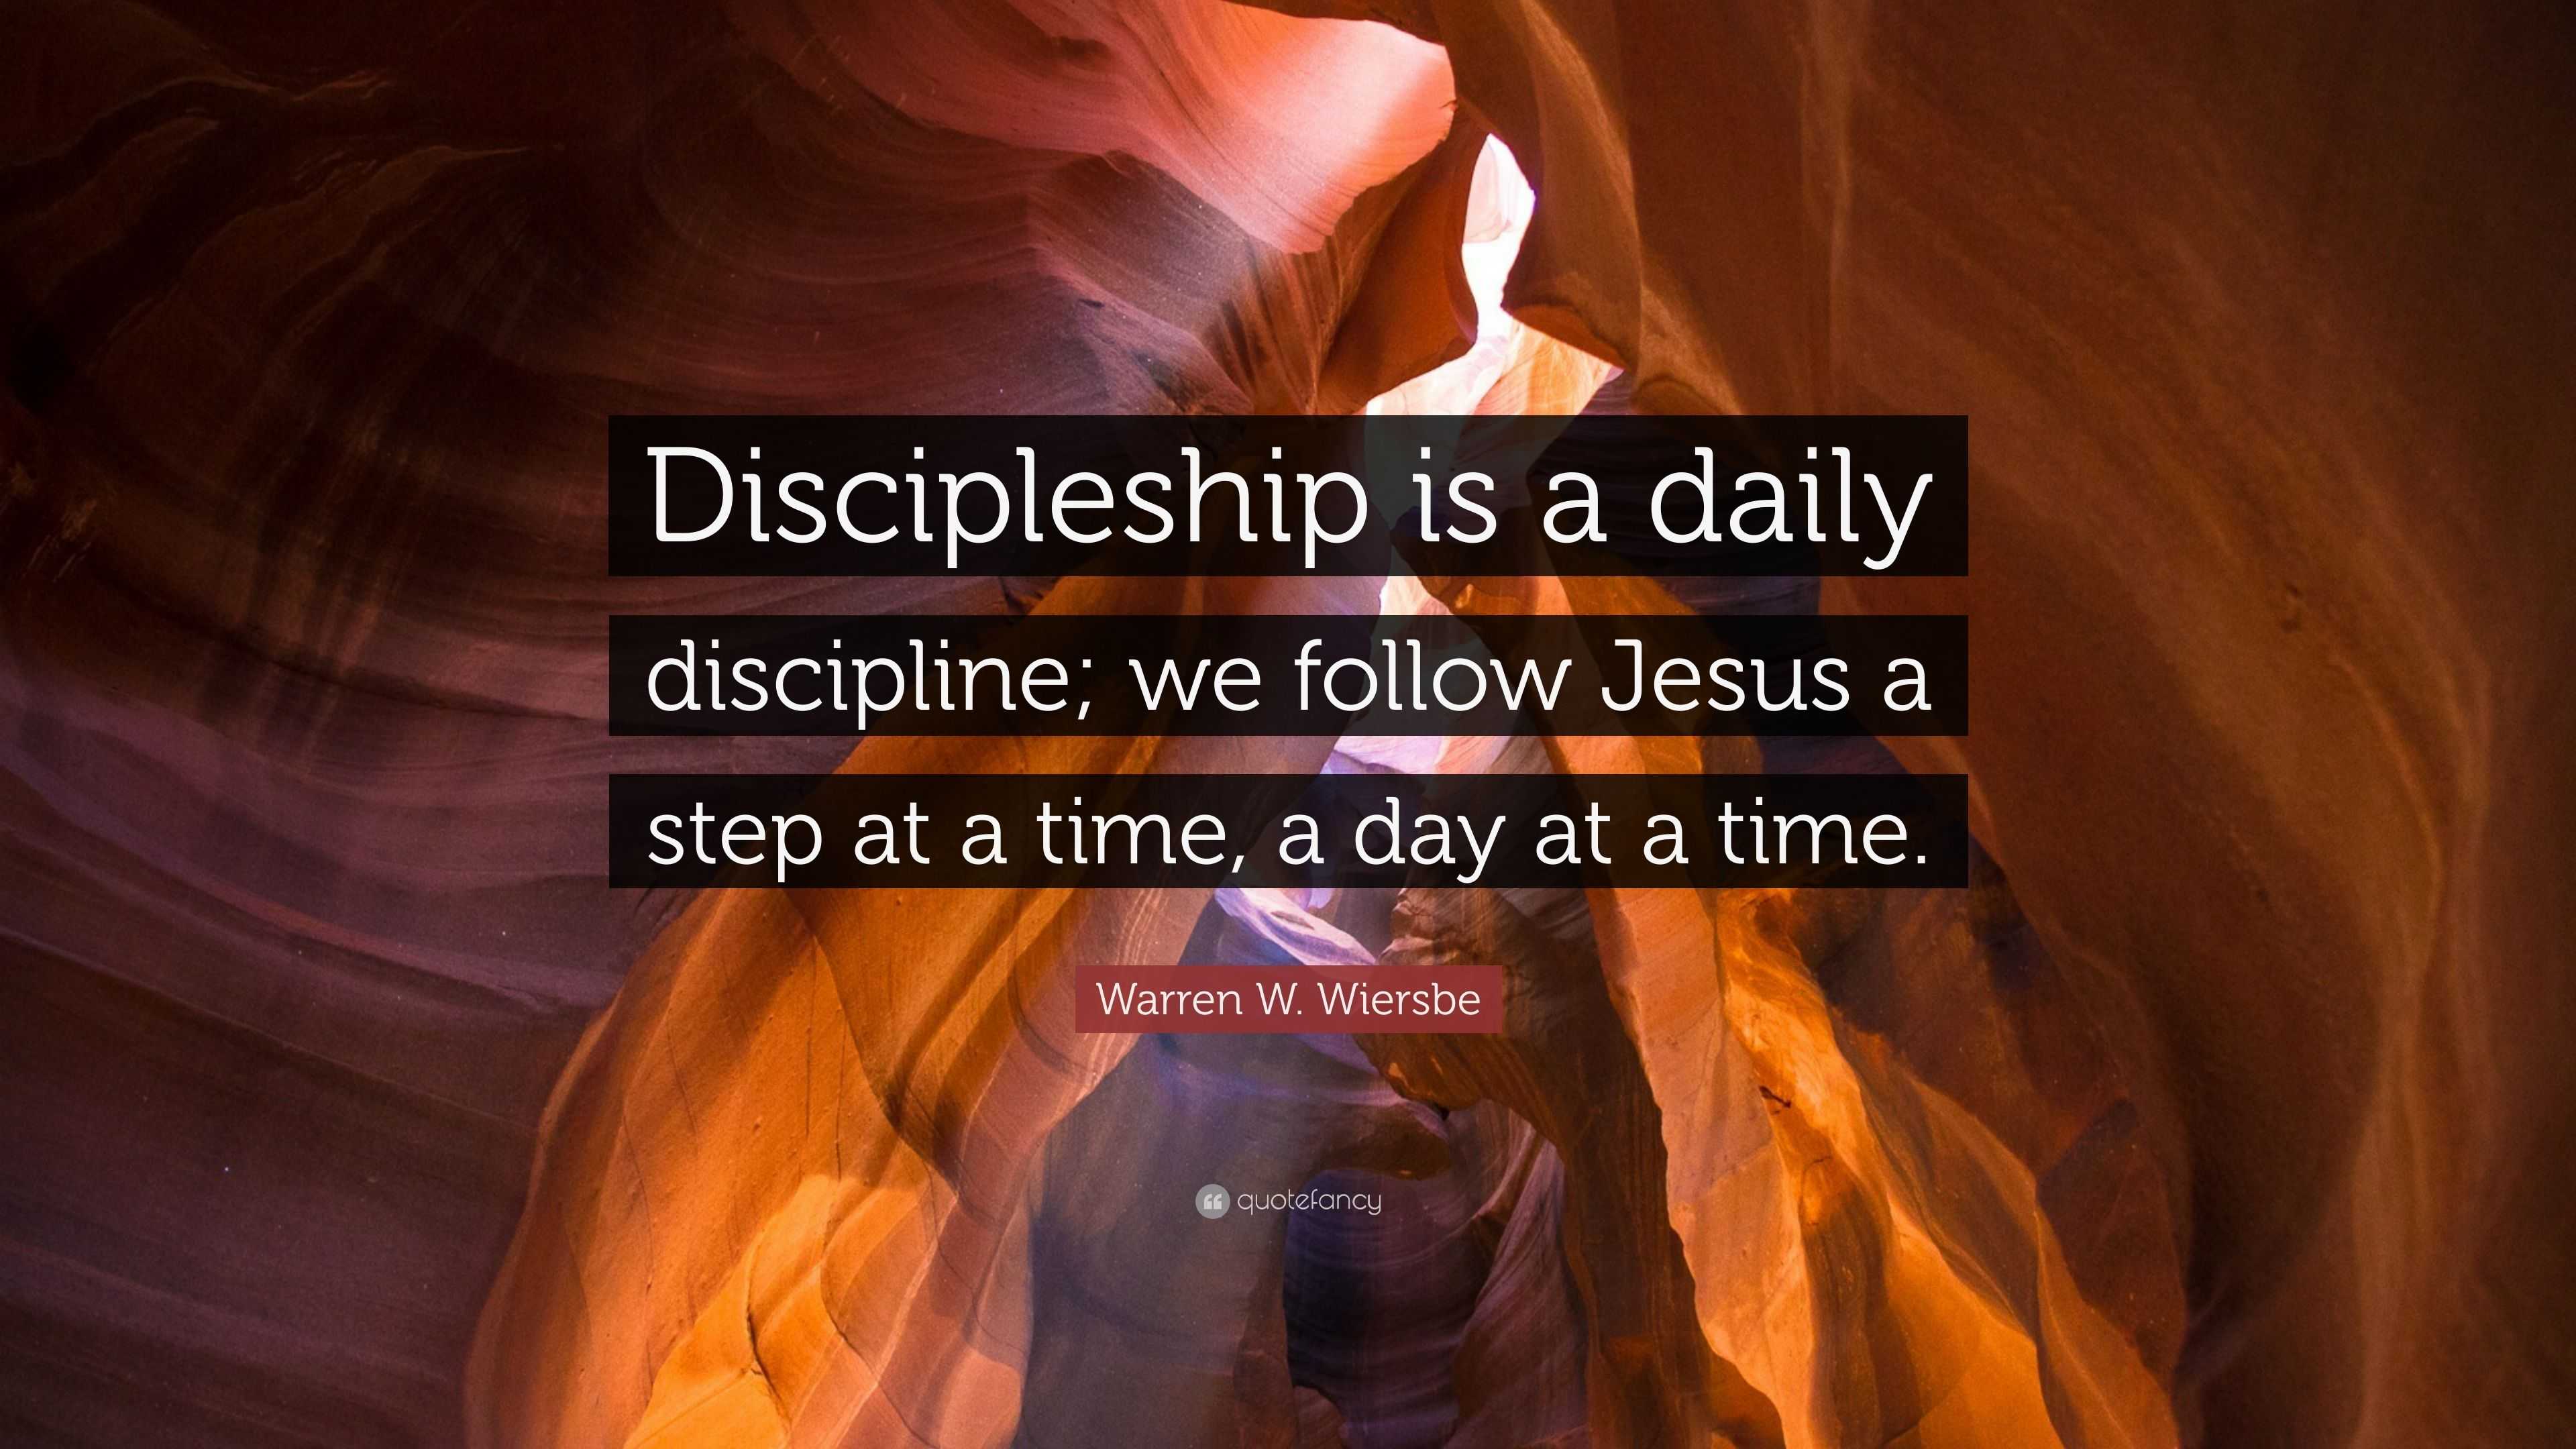 Warren W. Wiersbe Quote “Discipleship is a daily discipline; we follow